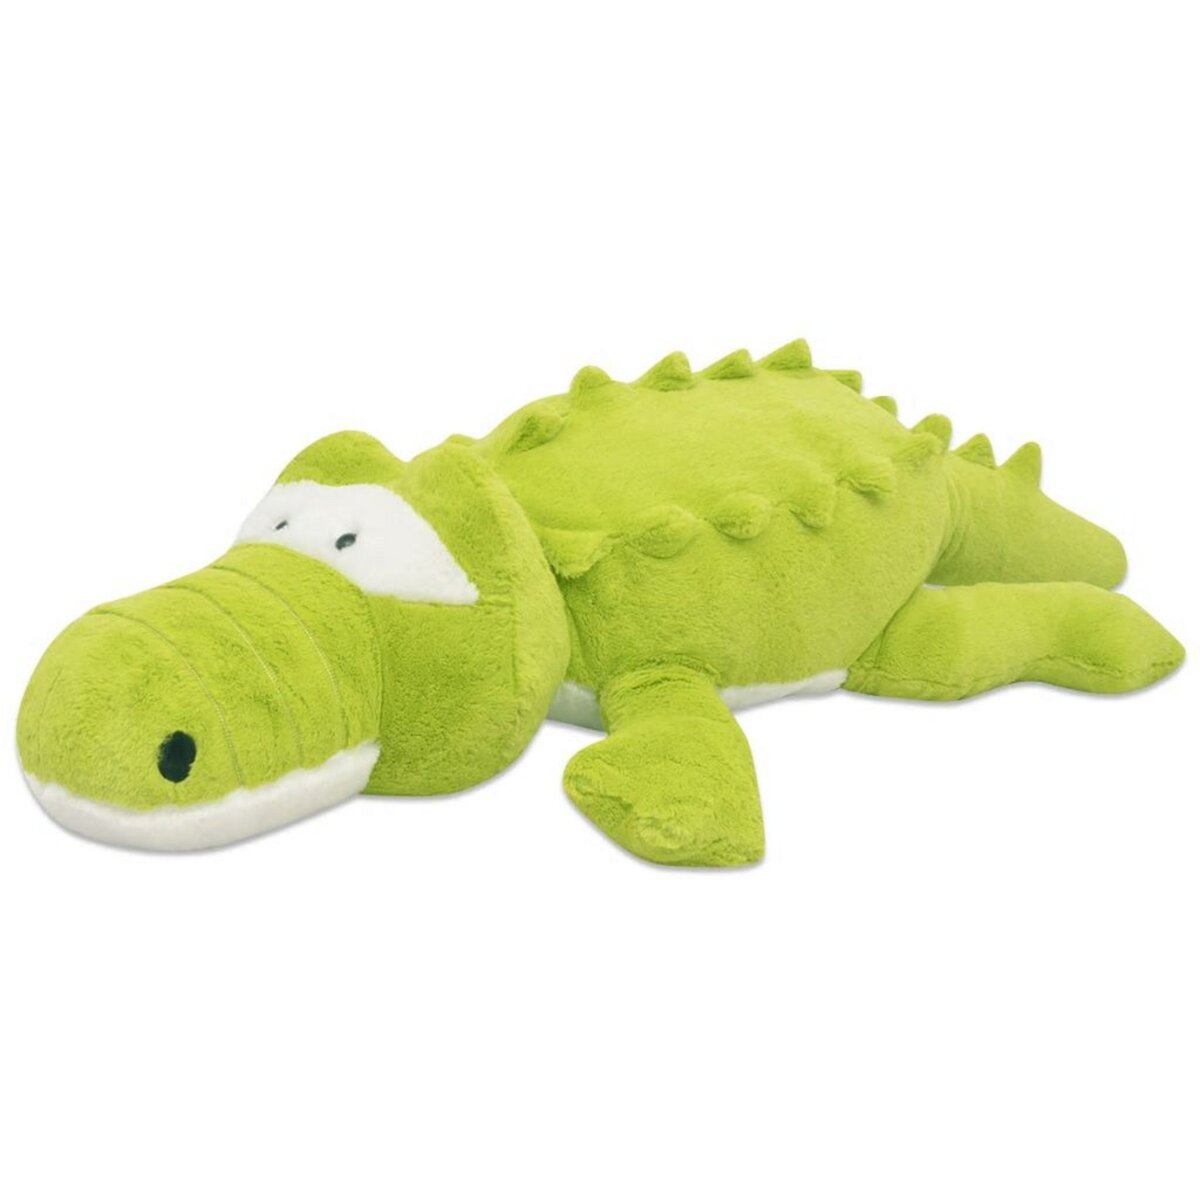 VIDAXL Crocodile jouet en peluche XXL 150 cm pas cher 